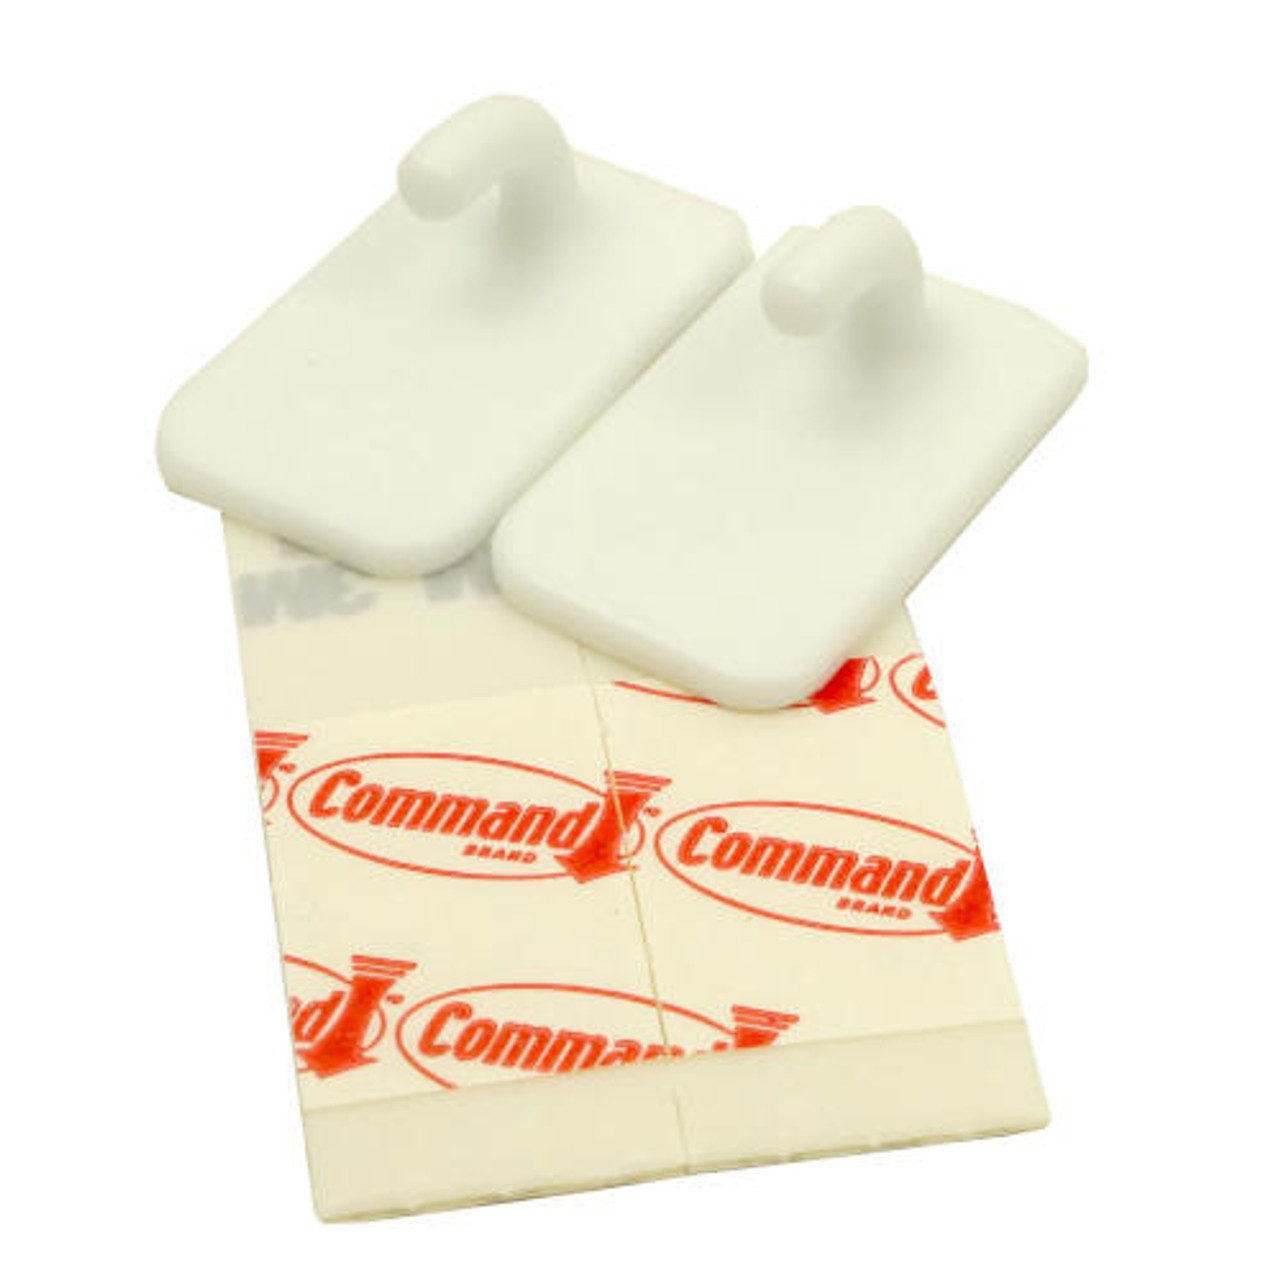 3m Command Mini Hooks 3 Pk., Tape, Adhesives & Fasteners, Household